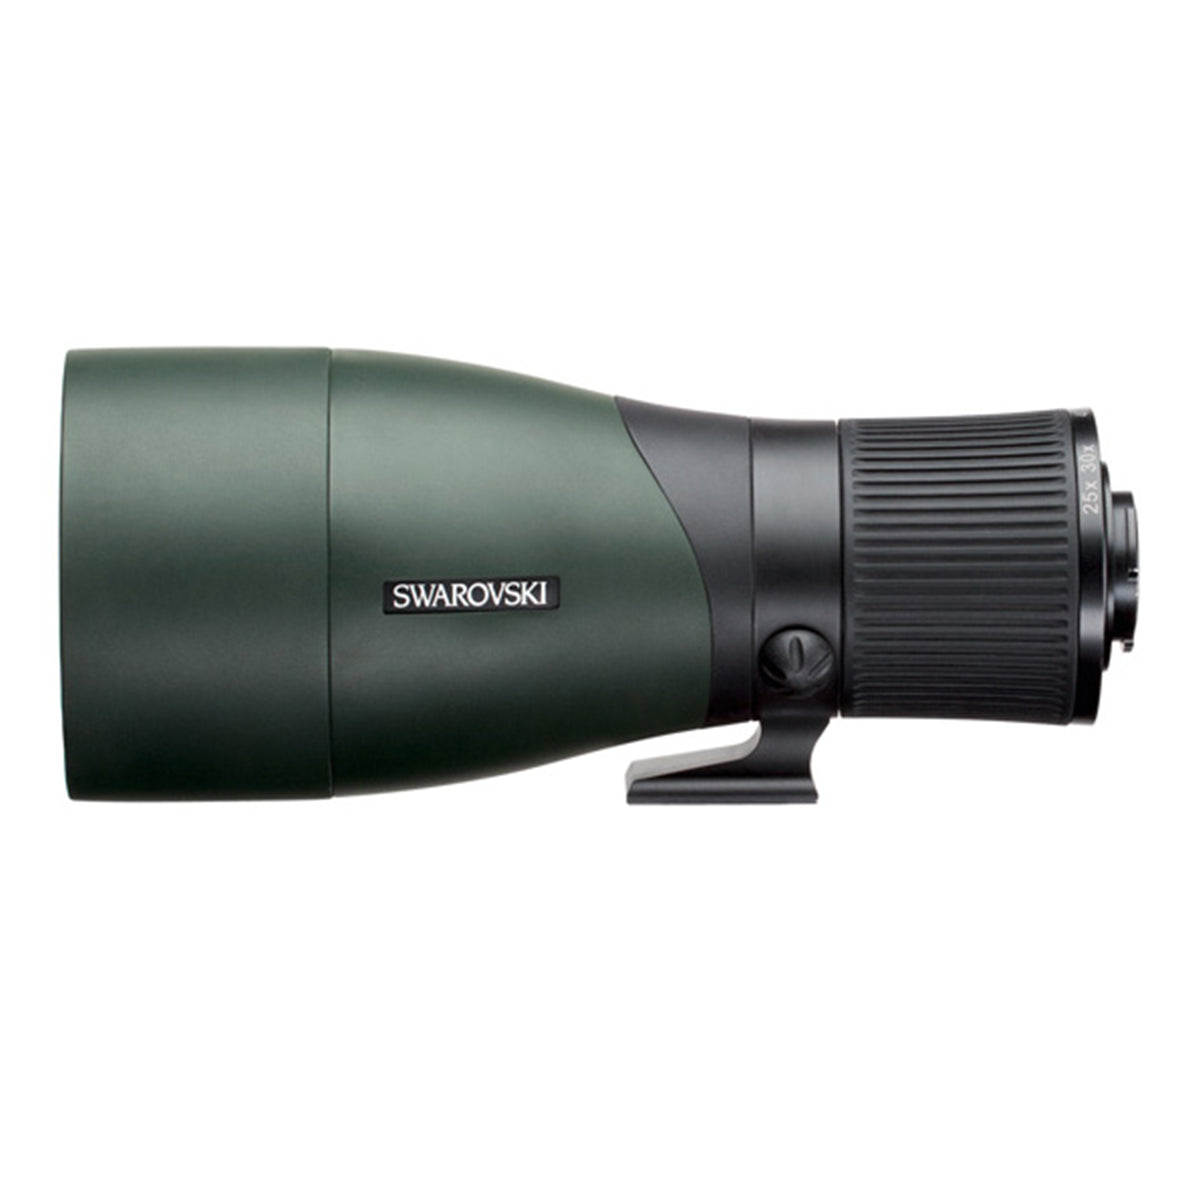 Swarovski ATX/STX 85mm Modular Objective in Swarovski ATX/STX 85 mm Modular Objective by Swarovski Optik | Optics - goHUNT Shop by GOHUNT | Swarovski Optik - GOHUNT Shop